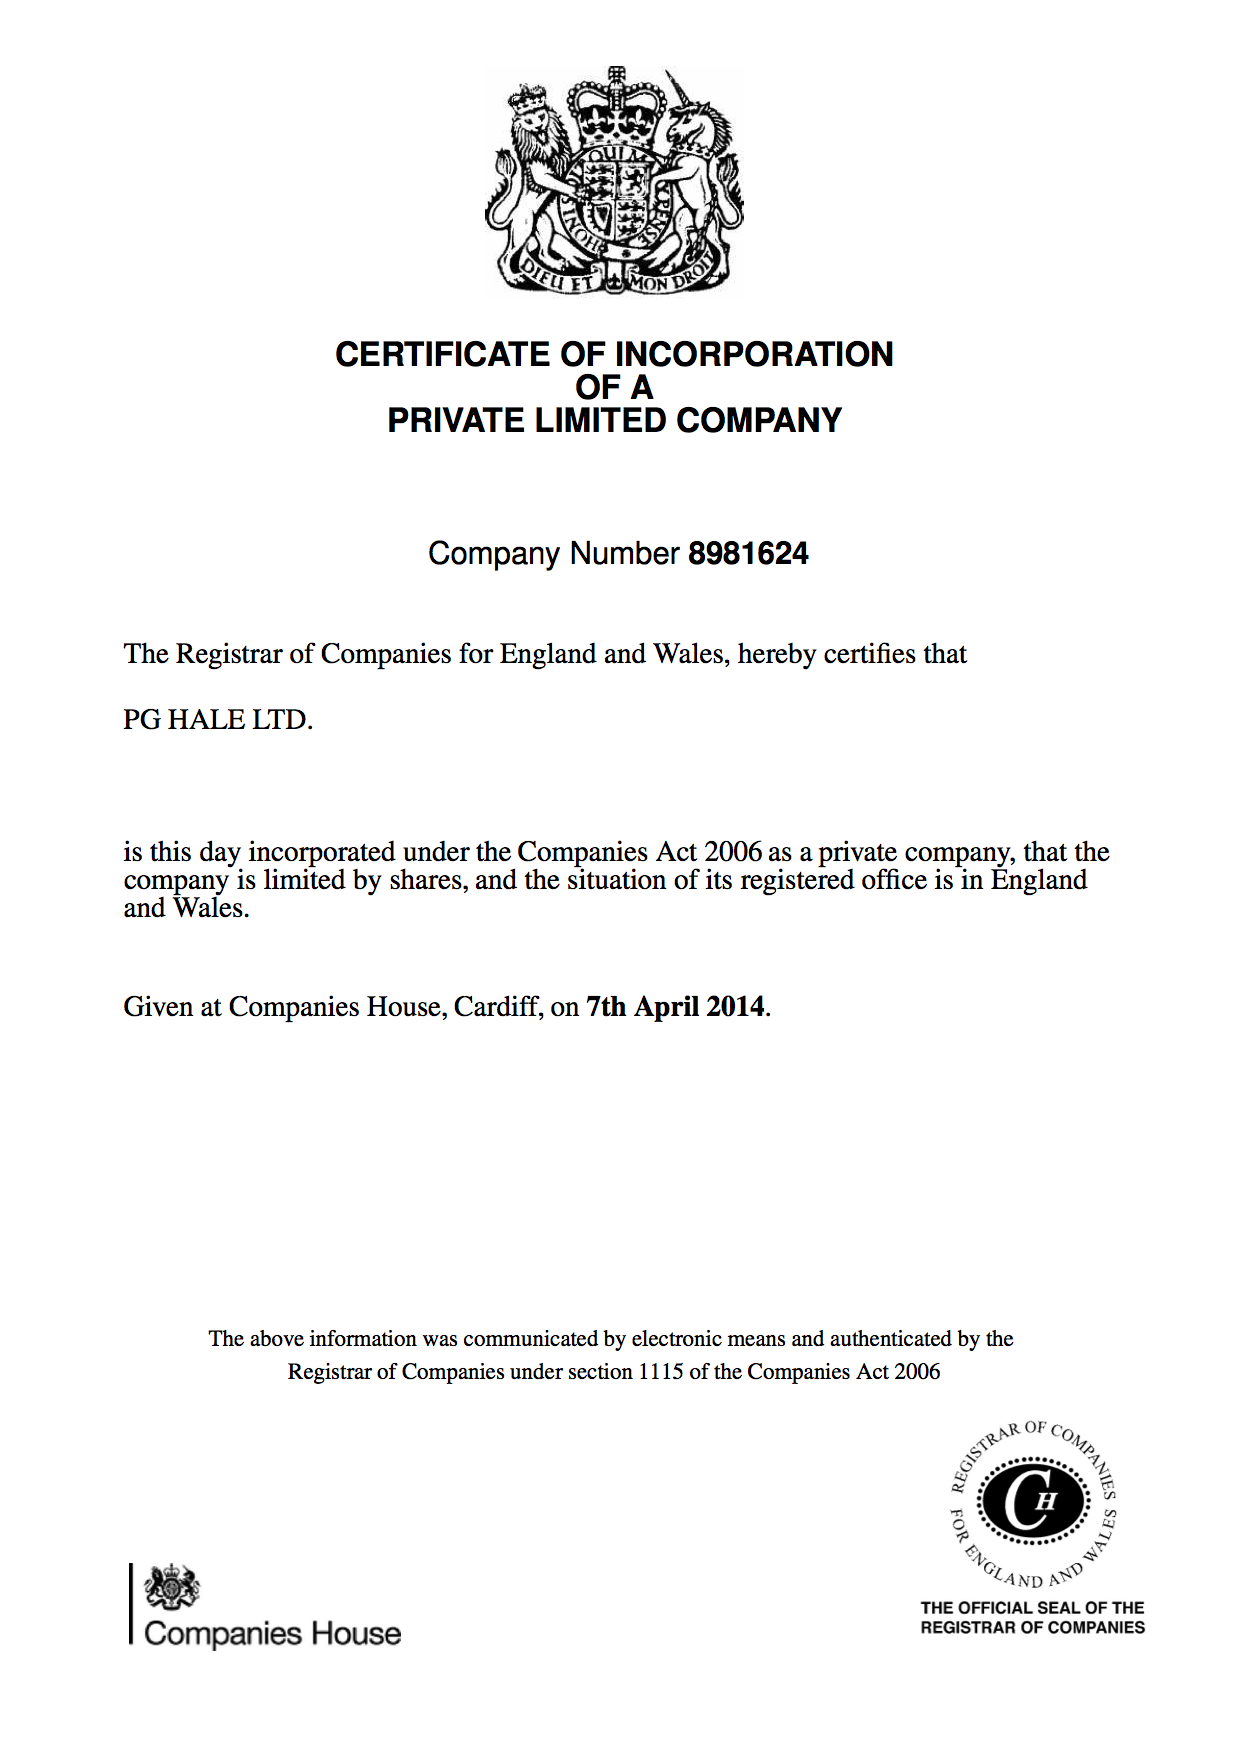 PG Hale Ltd. Certificate of Incorporation